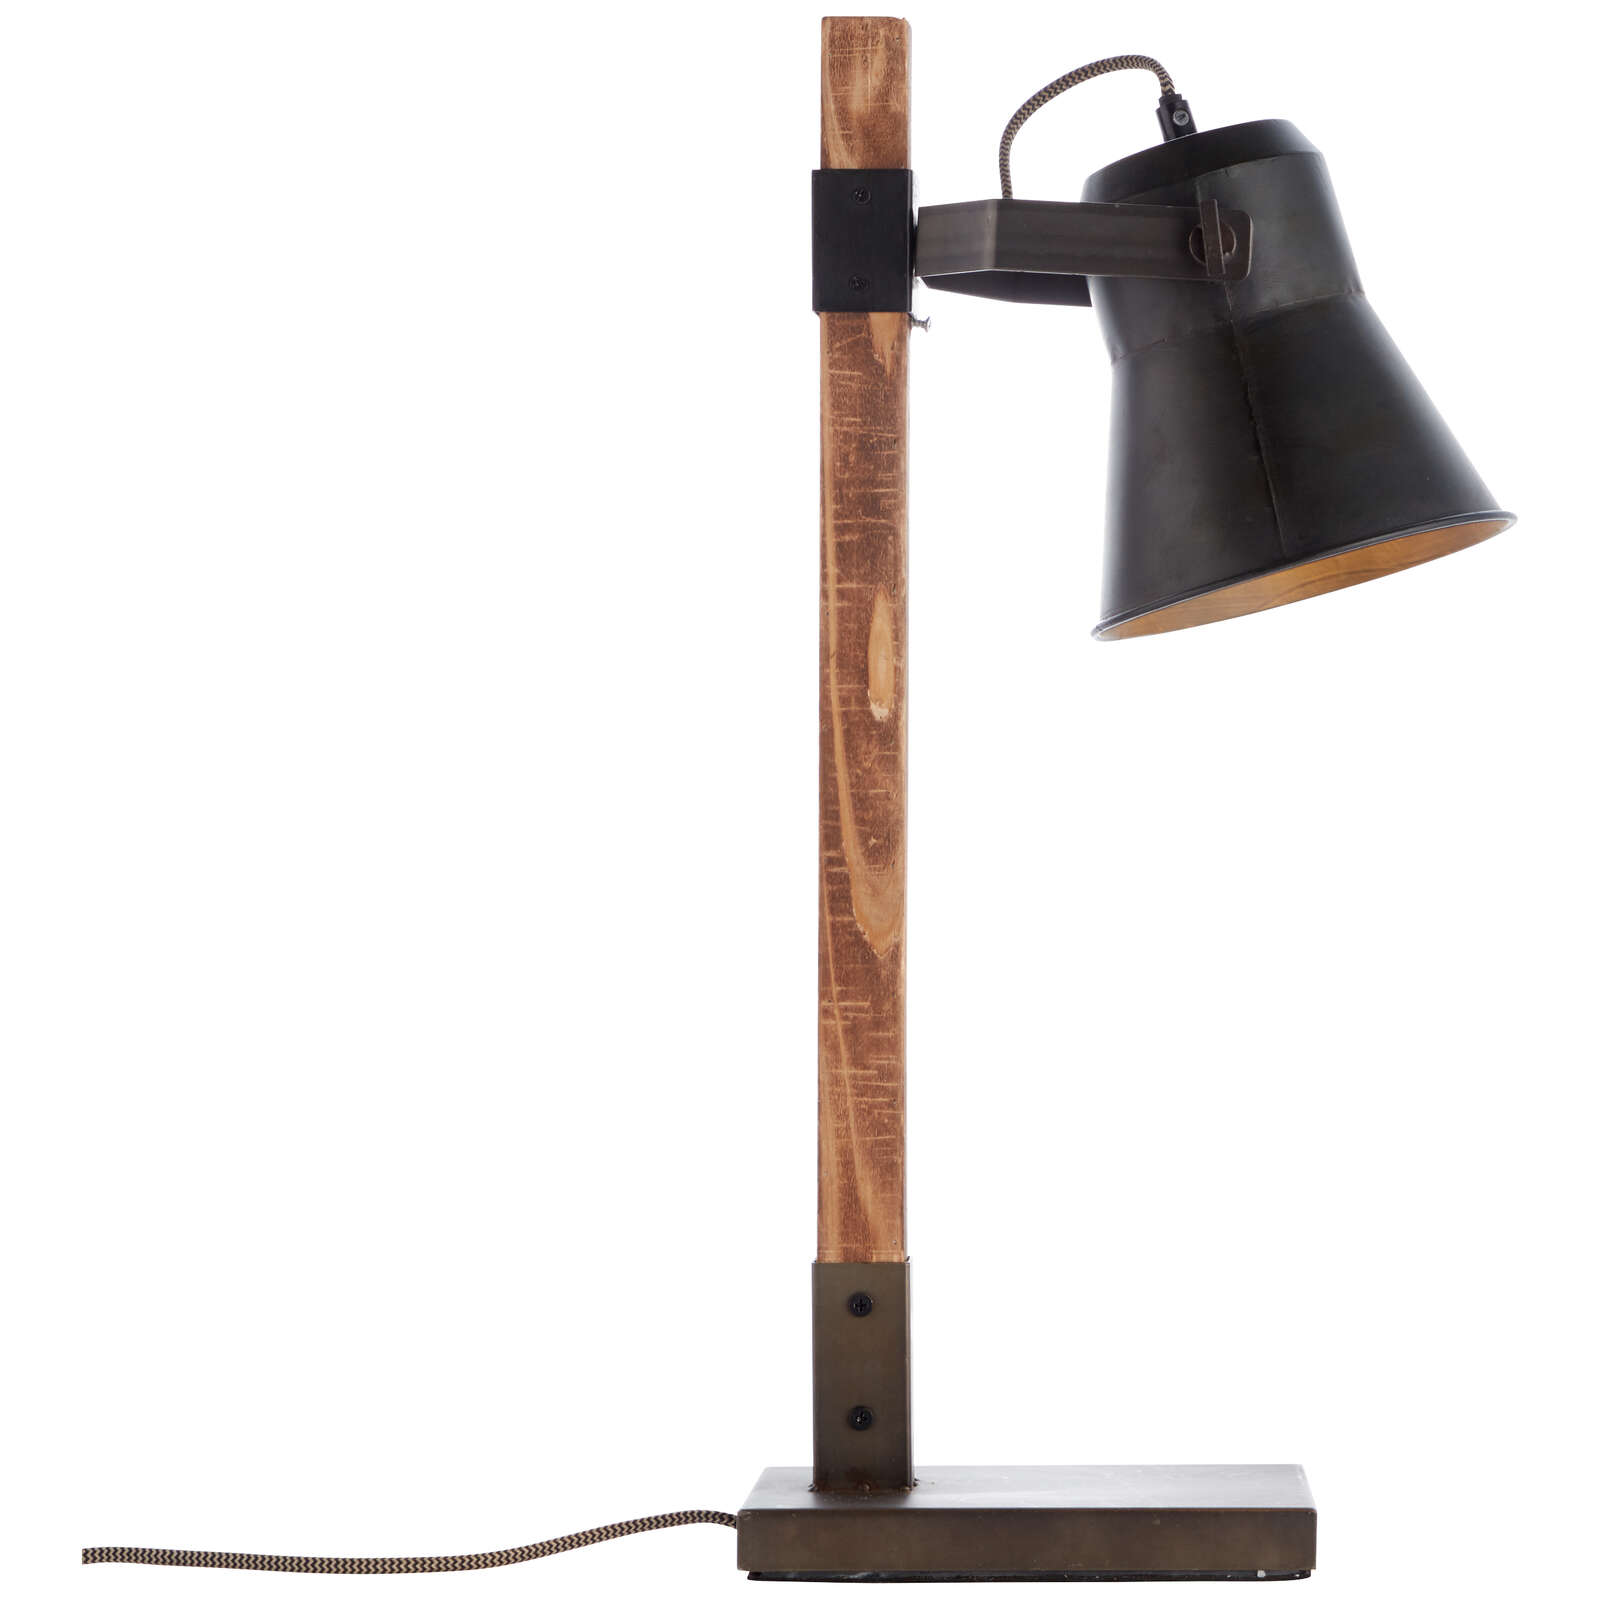             Lámpara de mesa de madera - Maria 3 - Marrón
        